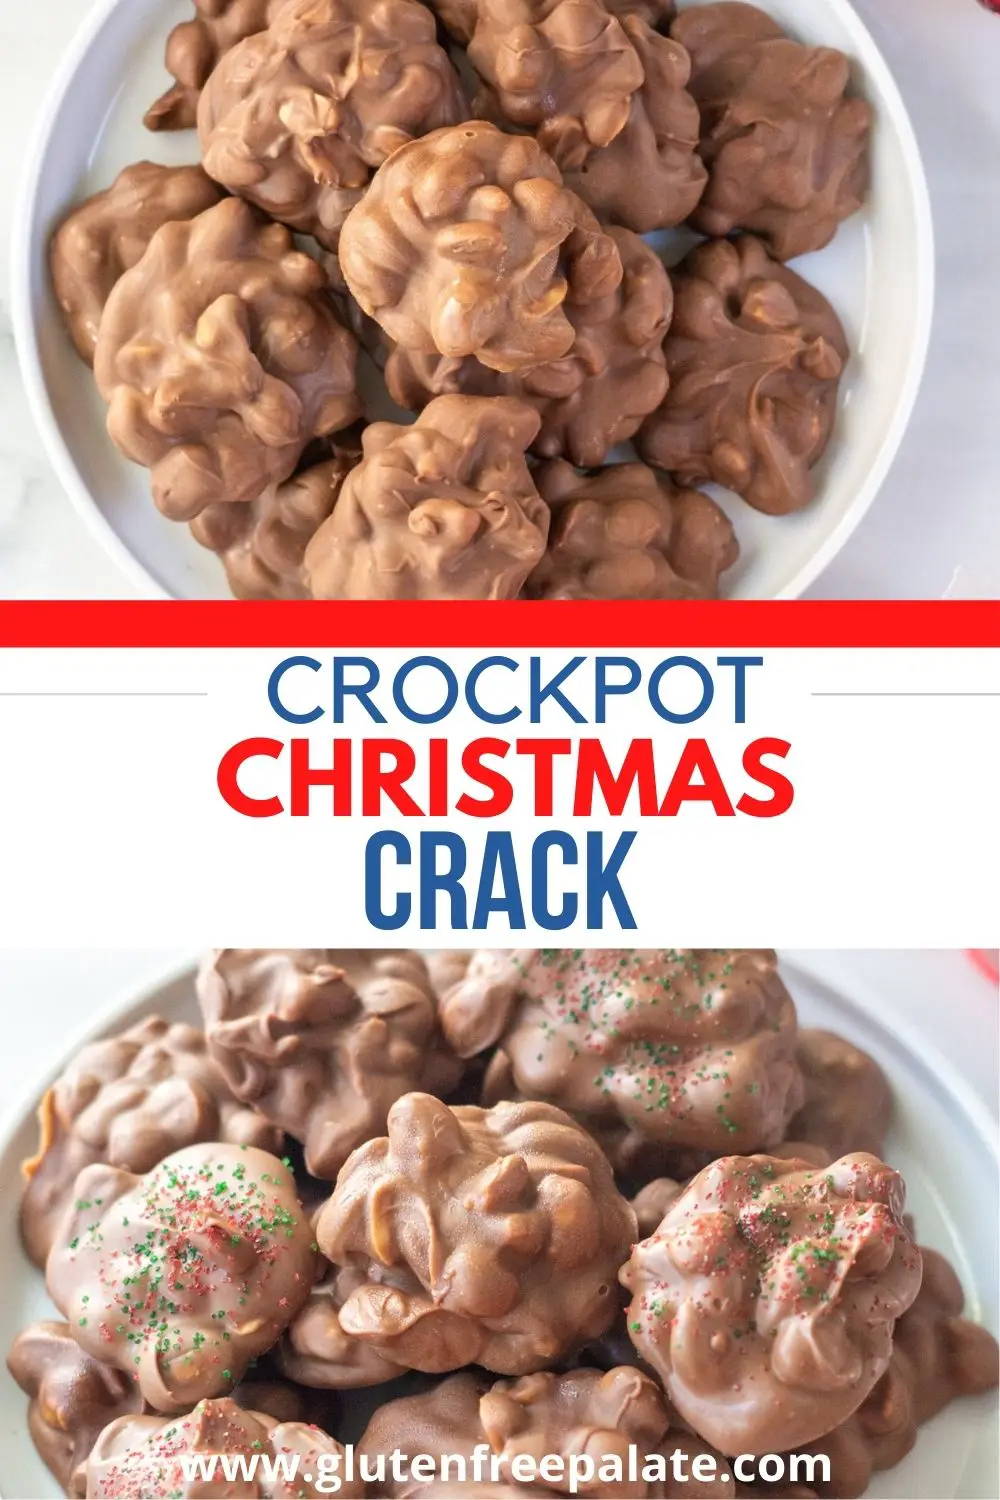 Crockpot Candy aka Crockpot Christmas Crack Recipe!